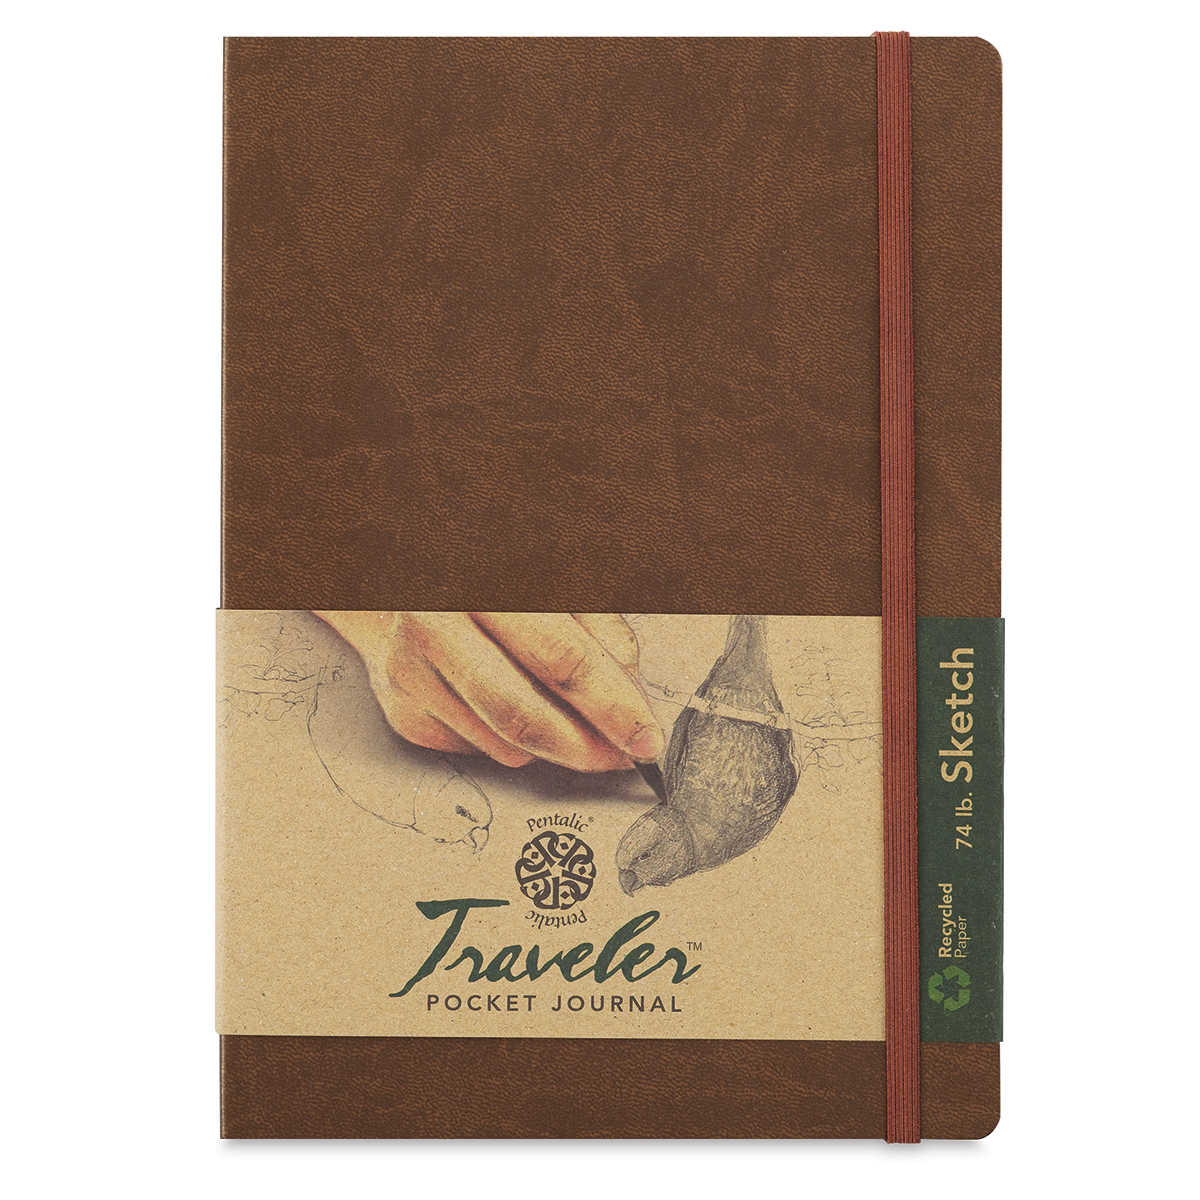 Pentalic Recycled Traveler's Sketchbook - 8-1/4 inch x 5-7/8 inch, Metallic Silver